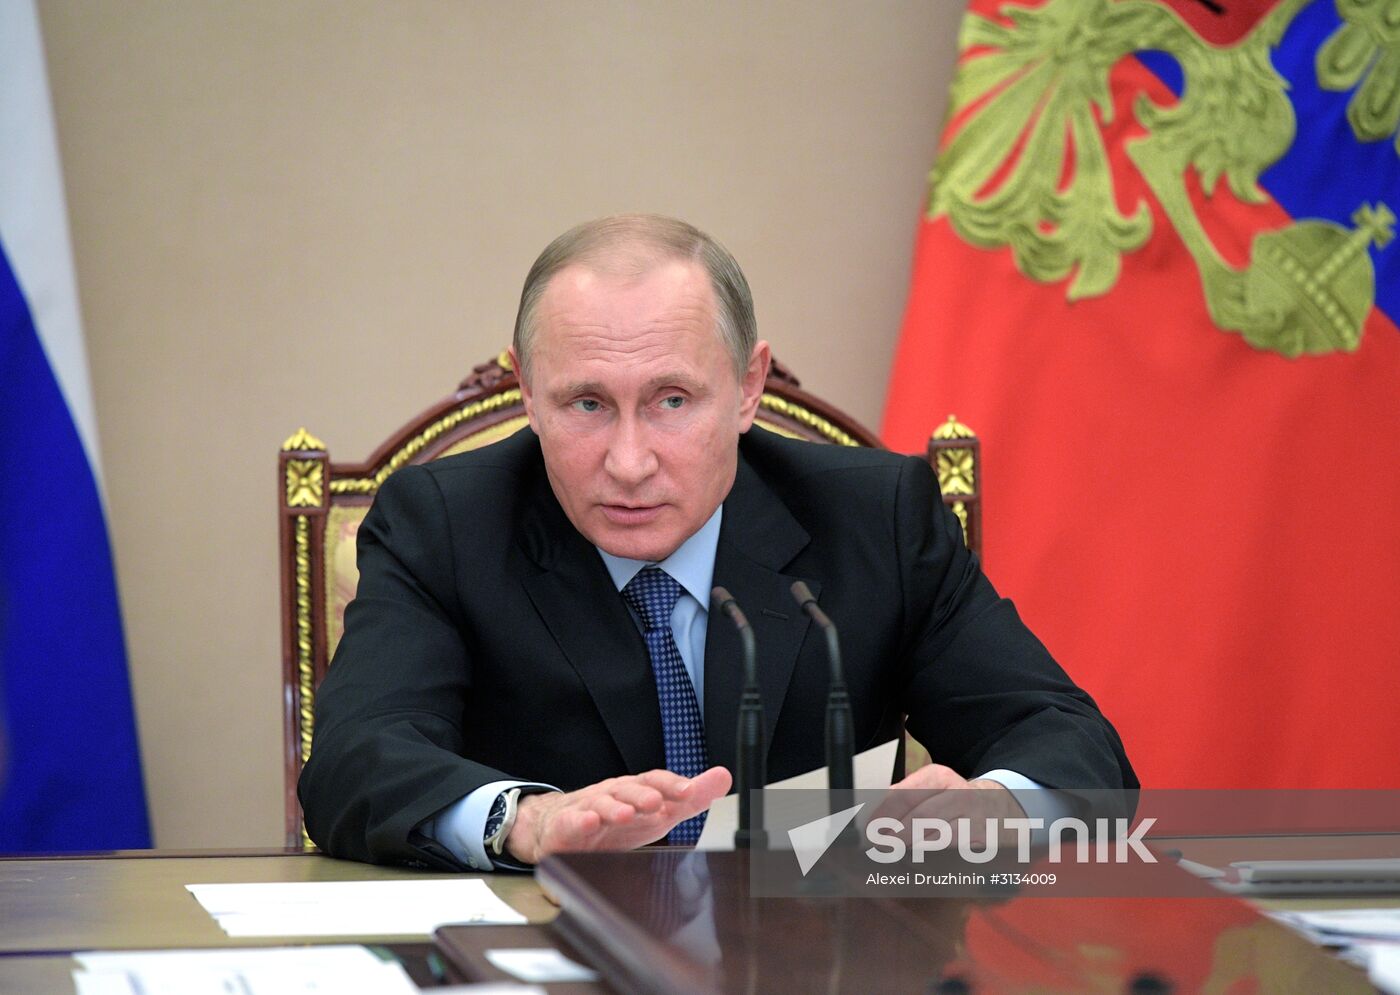 President Vladimir Putin conducts meeting on economic matters